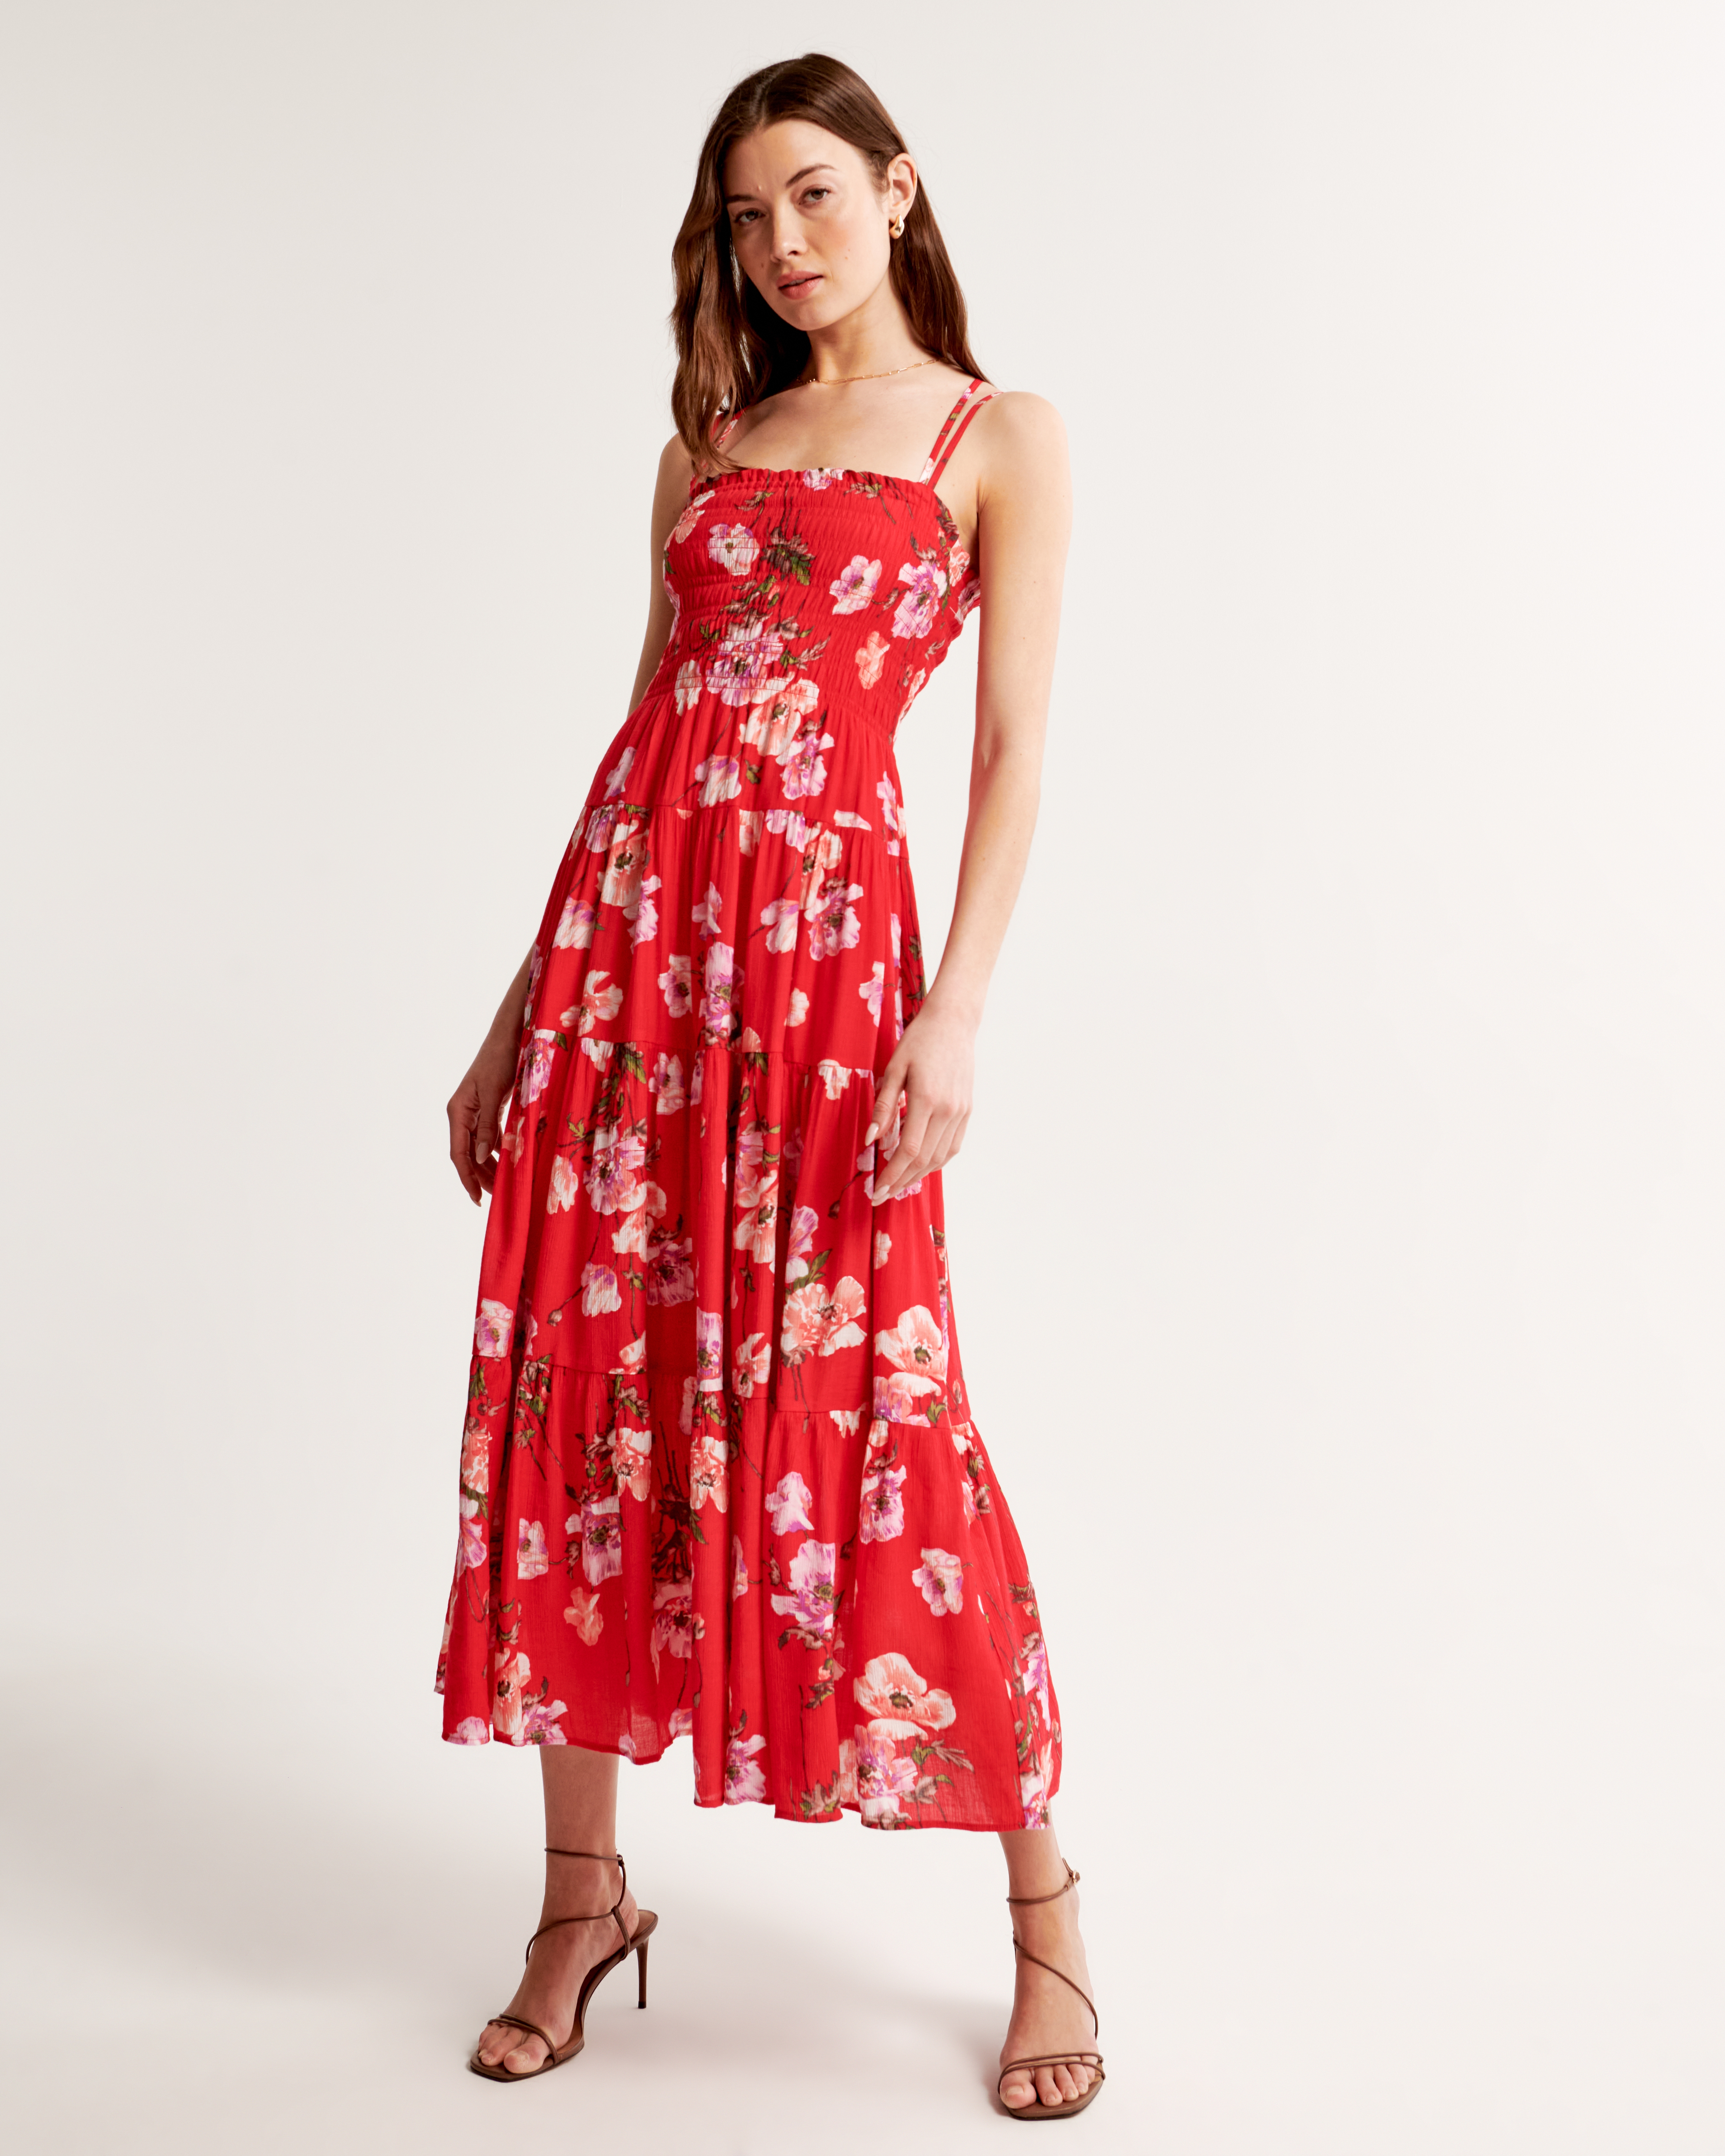 Abercrombie u0026 Fitch Smocked Bodice Maxi Dress | MarketFair Shoppes